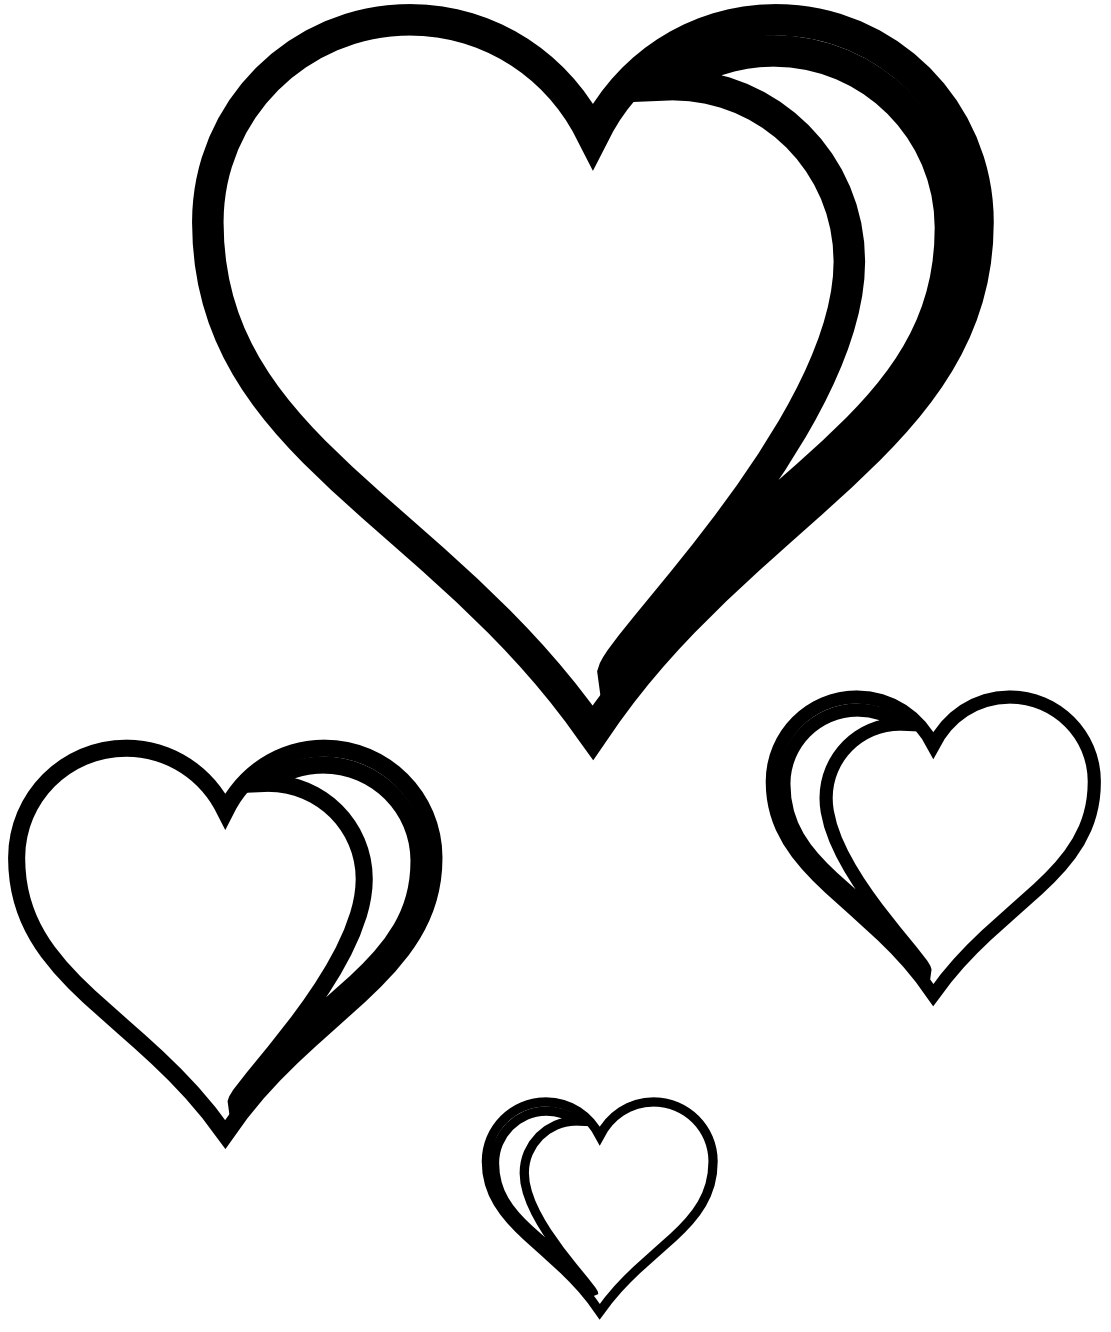 Black and White Heart Logo - Free White Heart Clipart, Download Free Clip Art, Free Clip Art